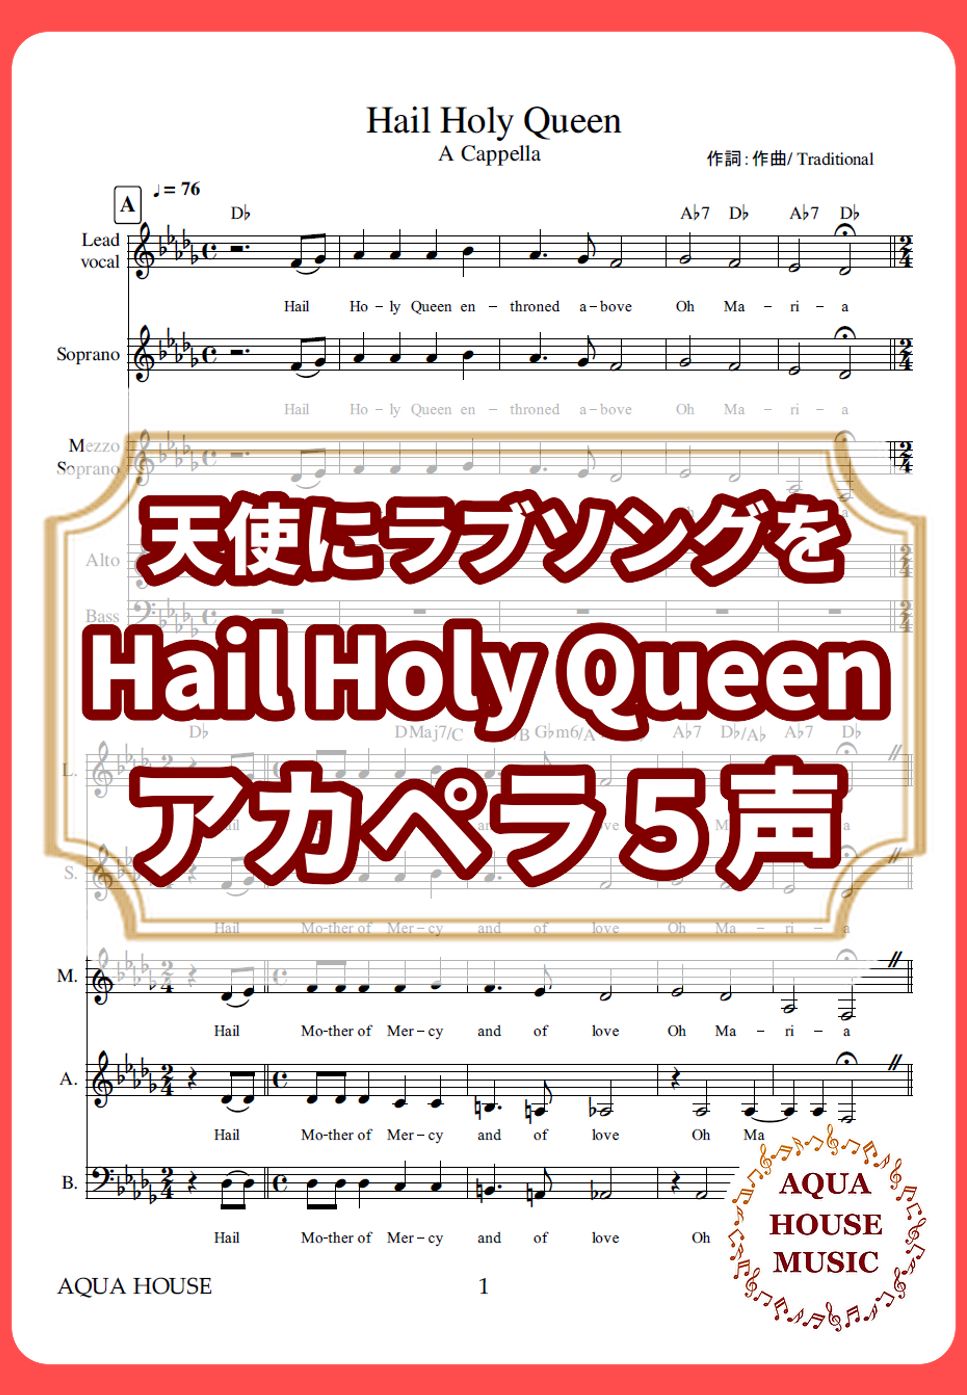 Hail Holy Queen/天使にラブソングを (アカペラ楽譜♪5声ボイパなし) by 飯田 亜紗子